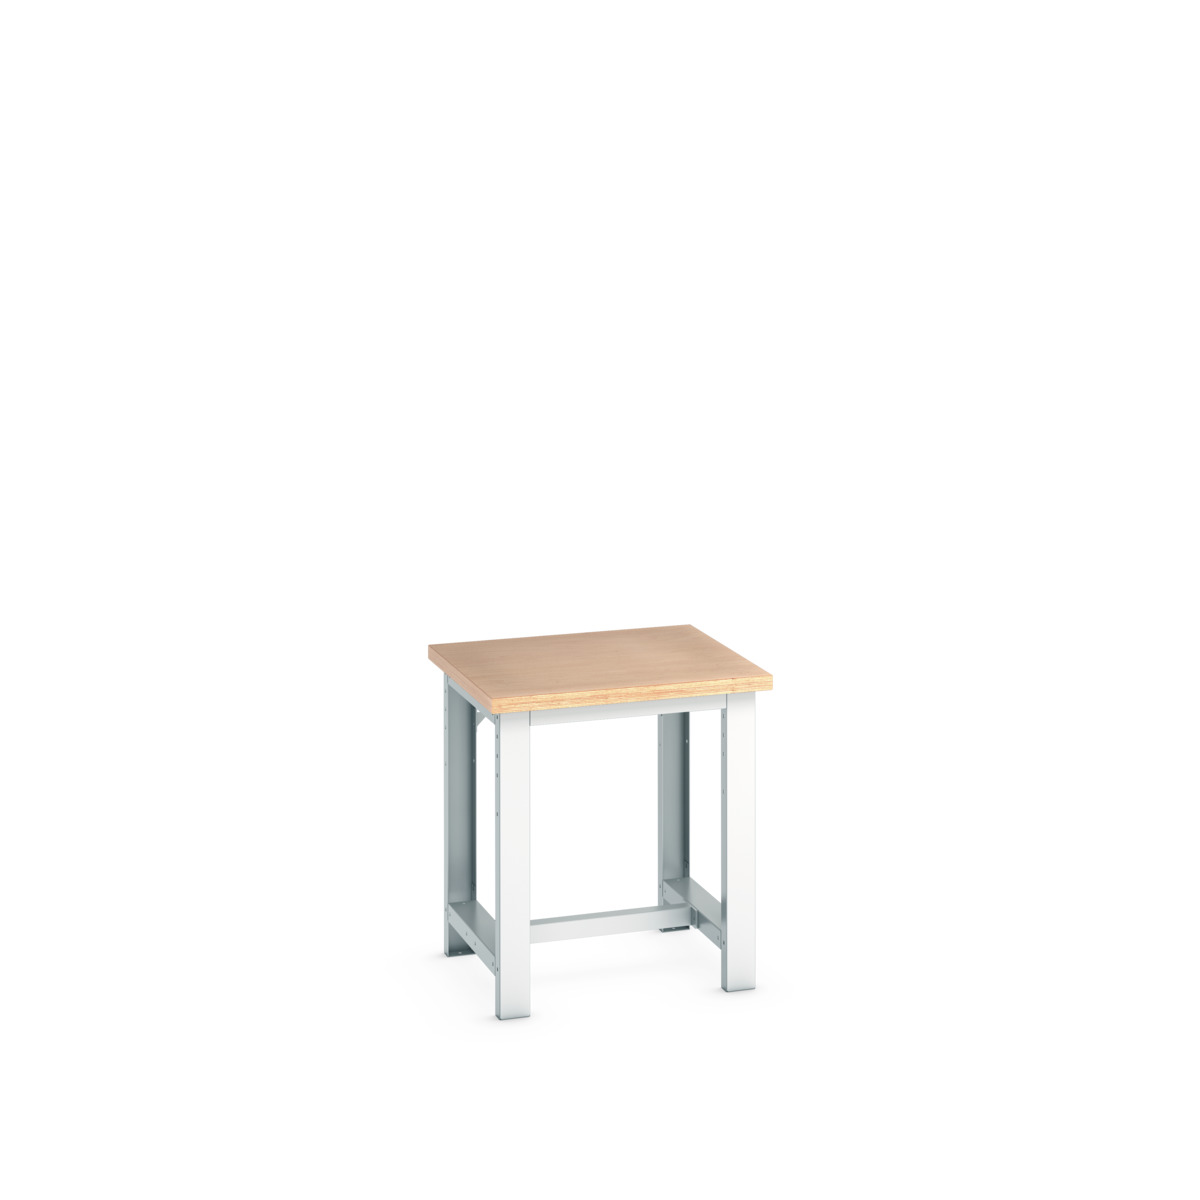 41003010. - cubio framework bench (mpx)